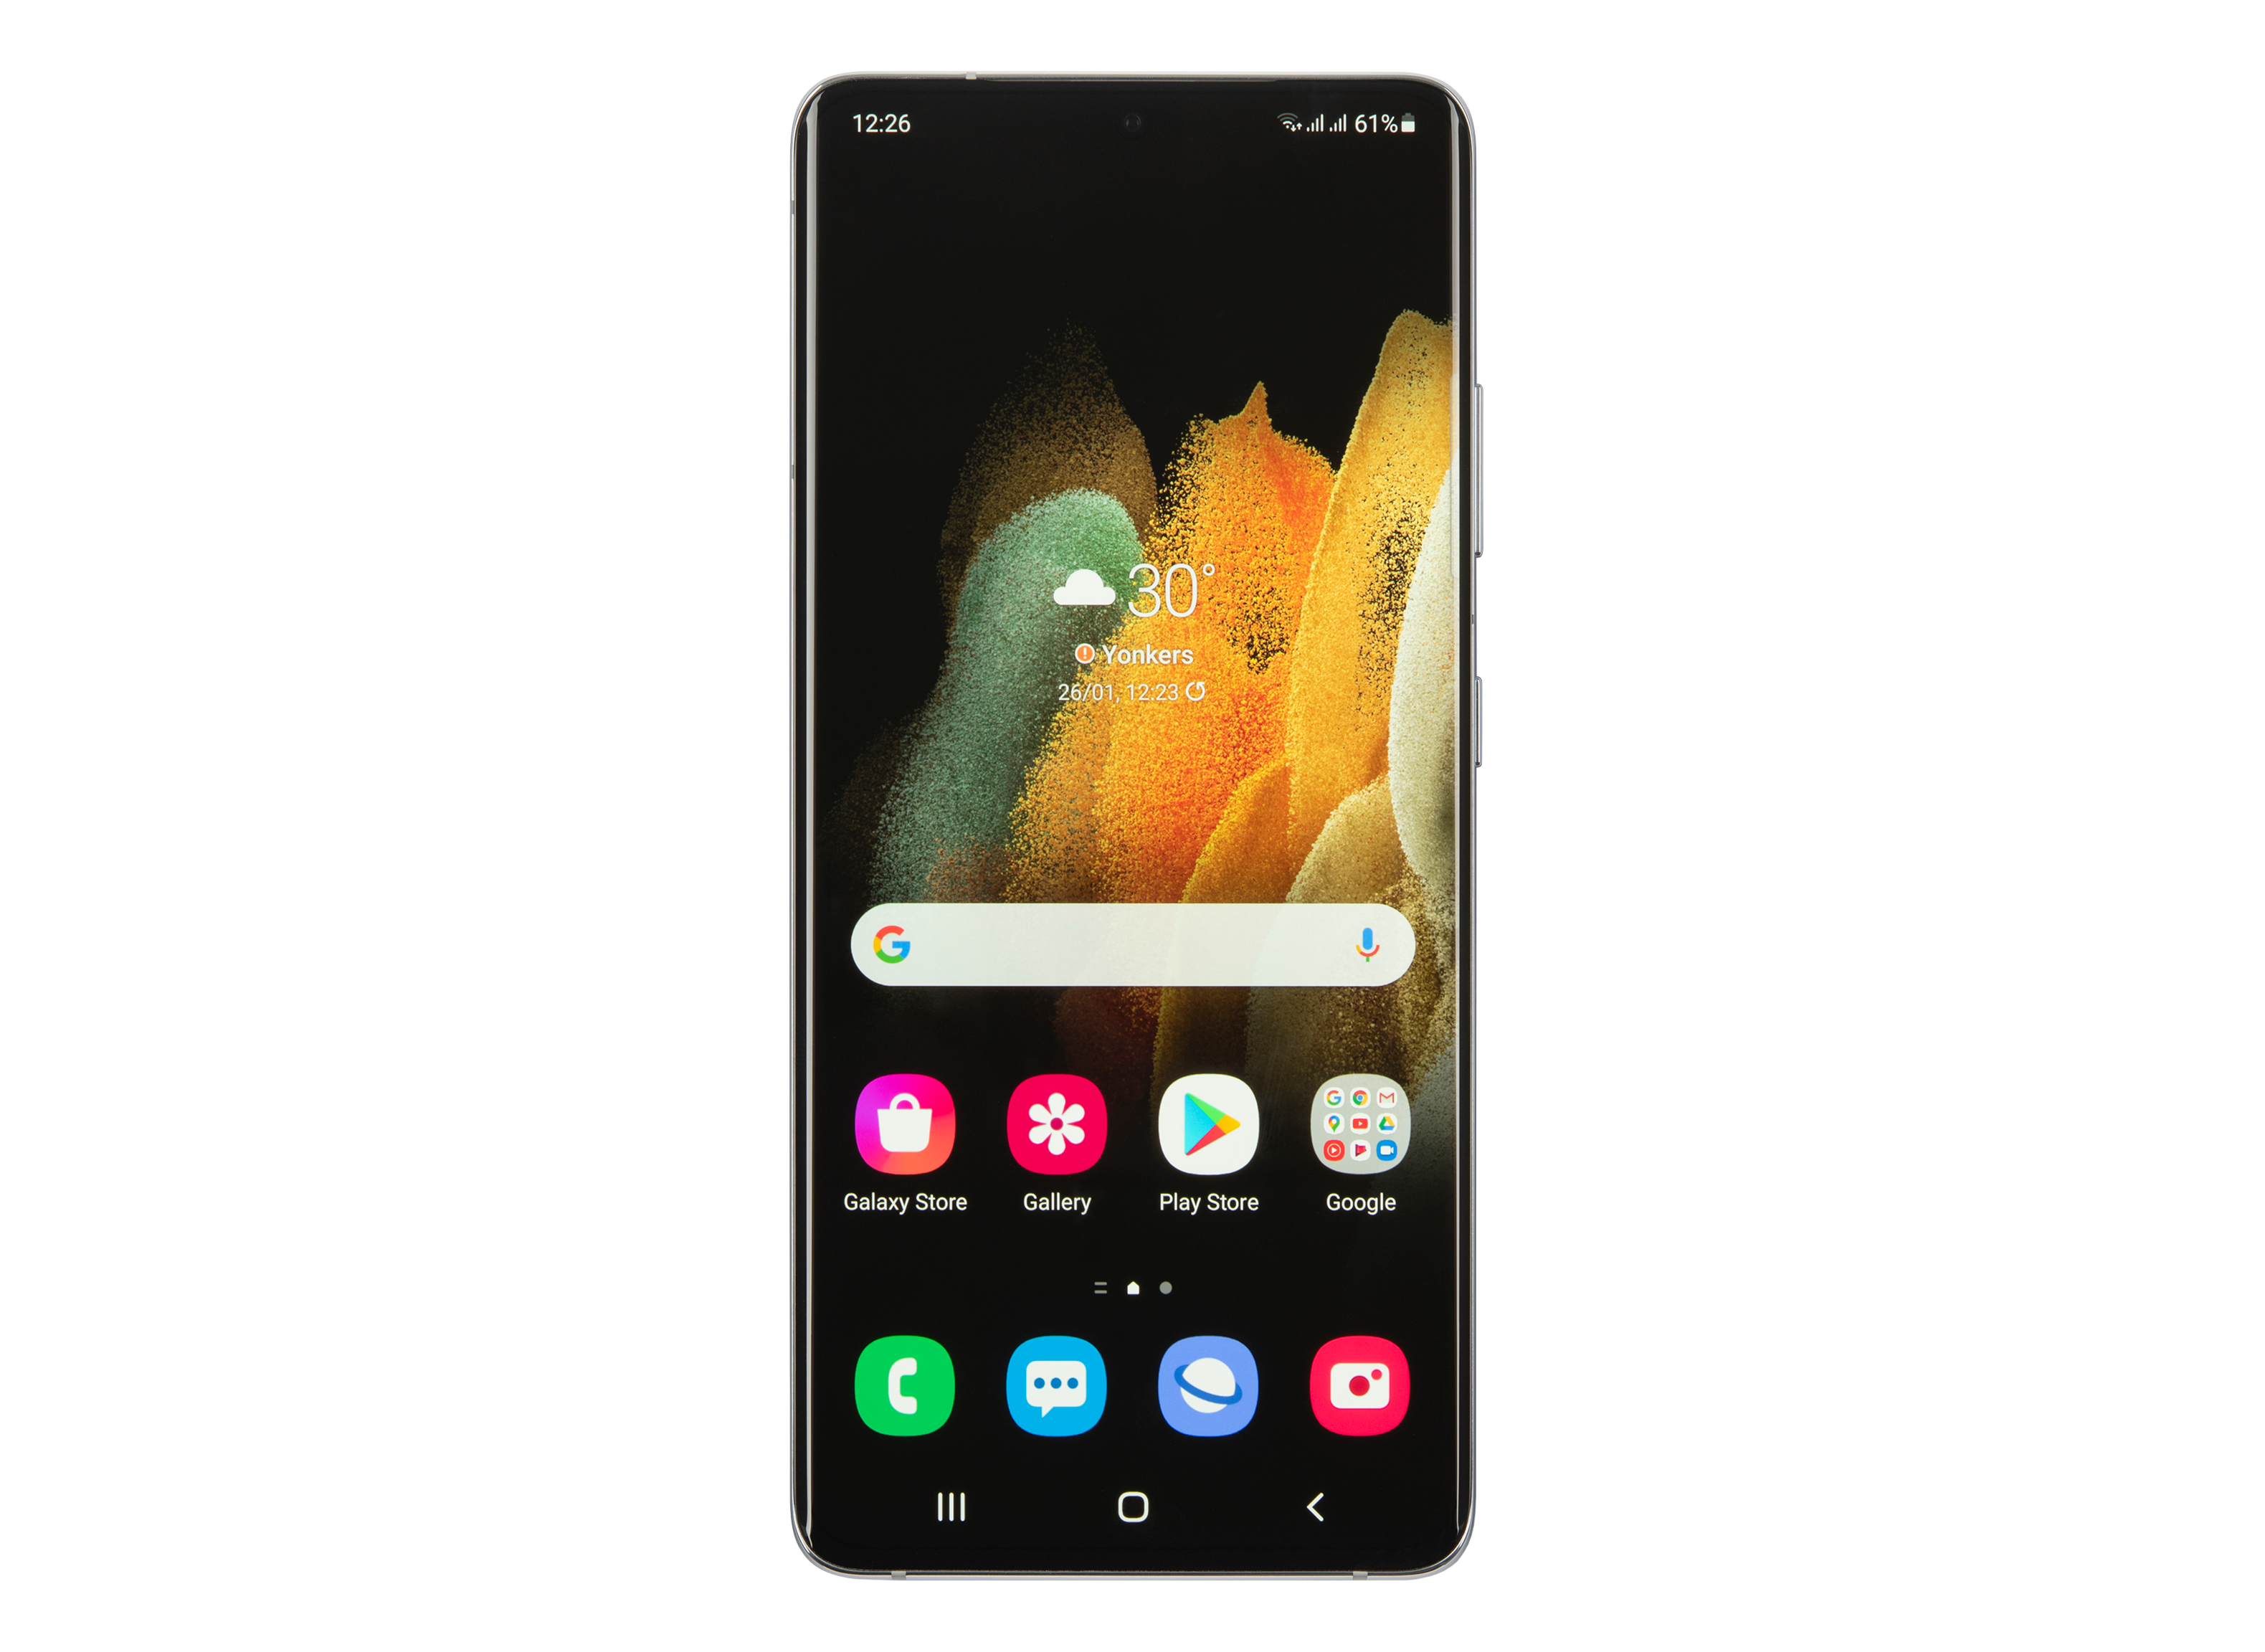 Samsung Galaxy S21 Ultra review - Pocket-lint